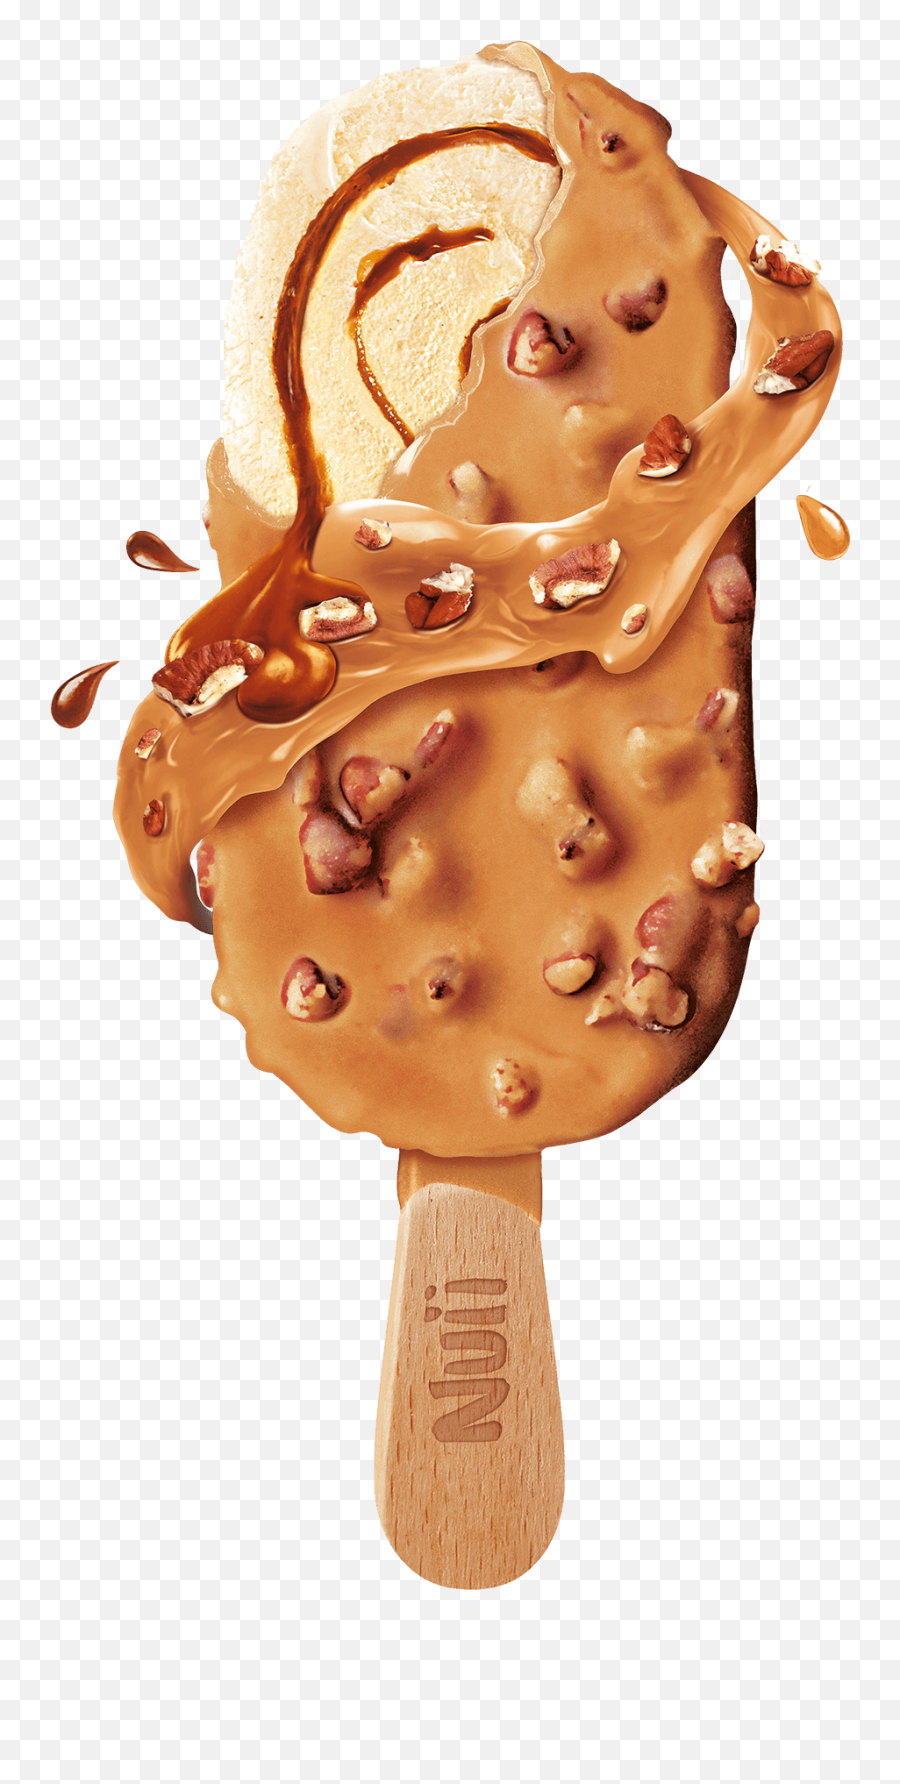 Caramel White Chocolate Texan Pecan - Nuii Caramel White Chocolate Texan Pecan Emoji,Fat Guy Eating Ice Cream Emoji